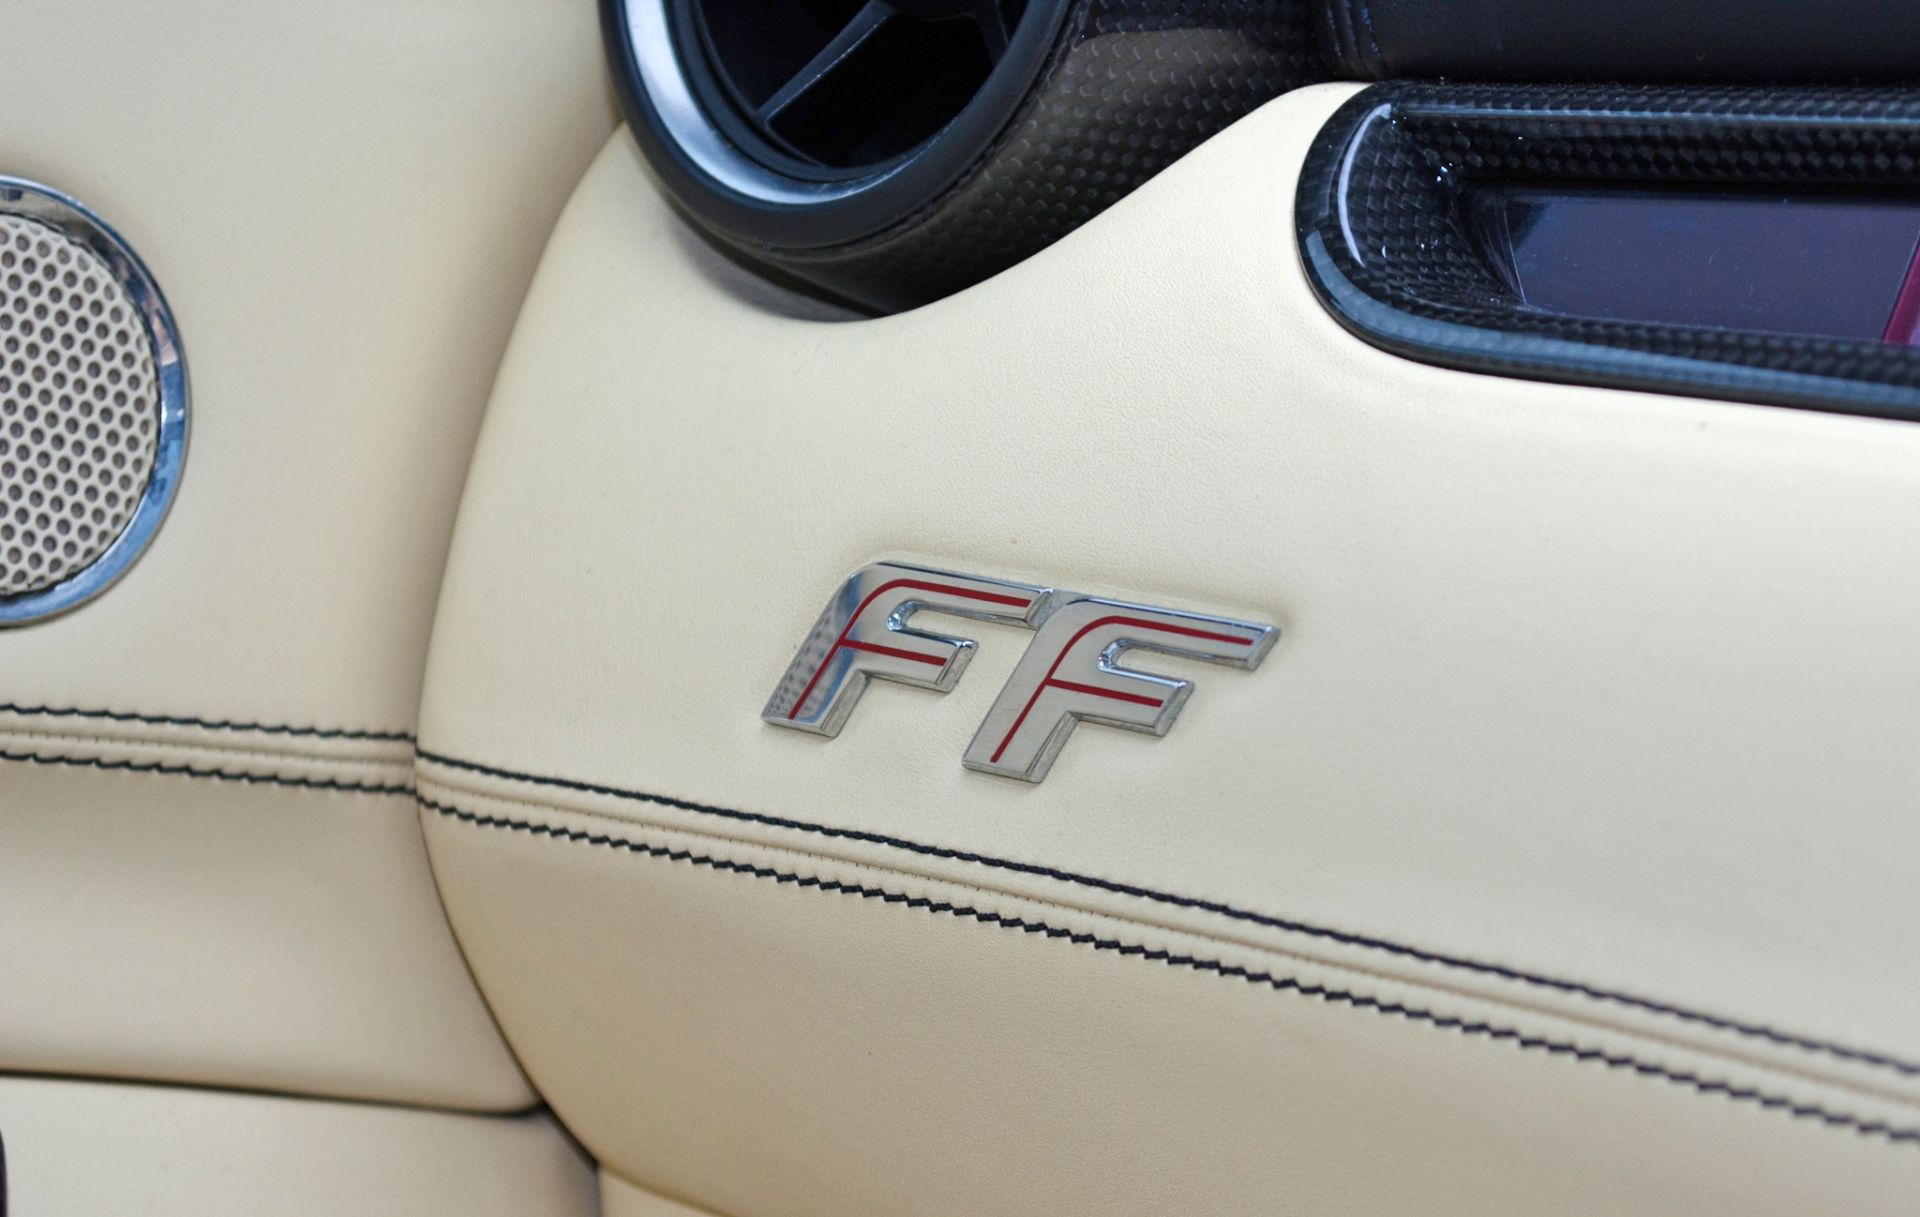 2014 Ferrari FF 6262cc V12 3 door coupe - Image 55 of 74